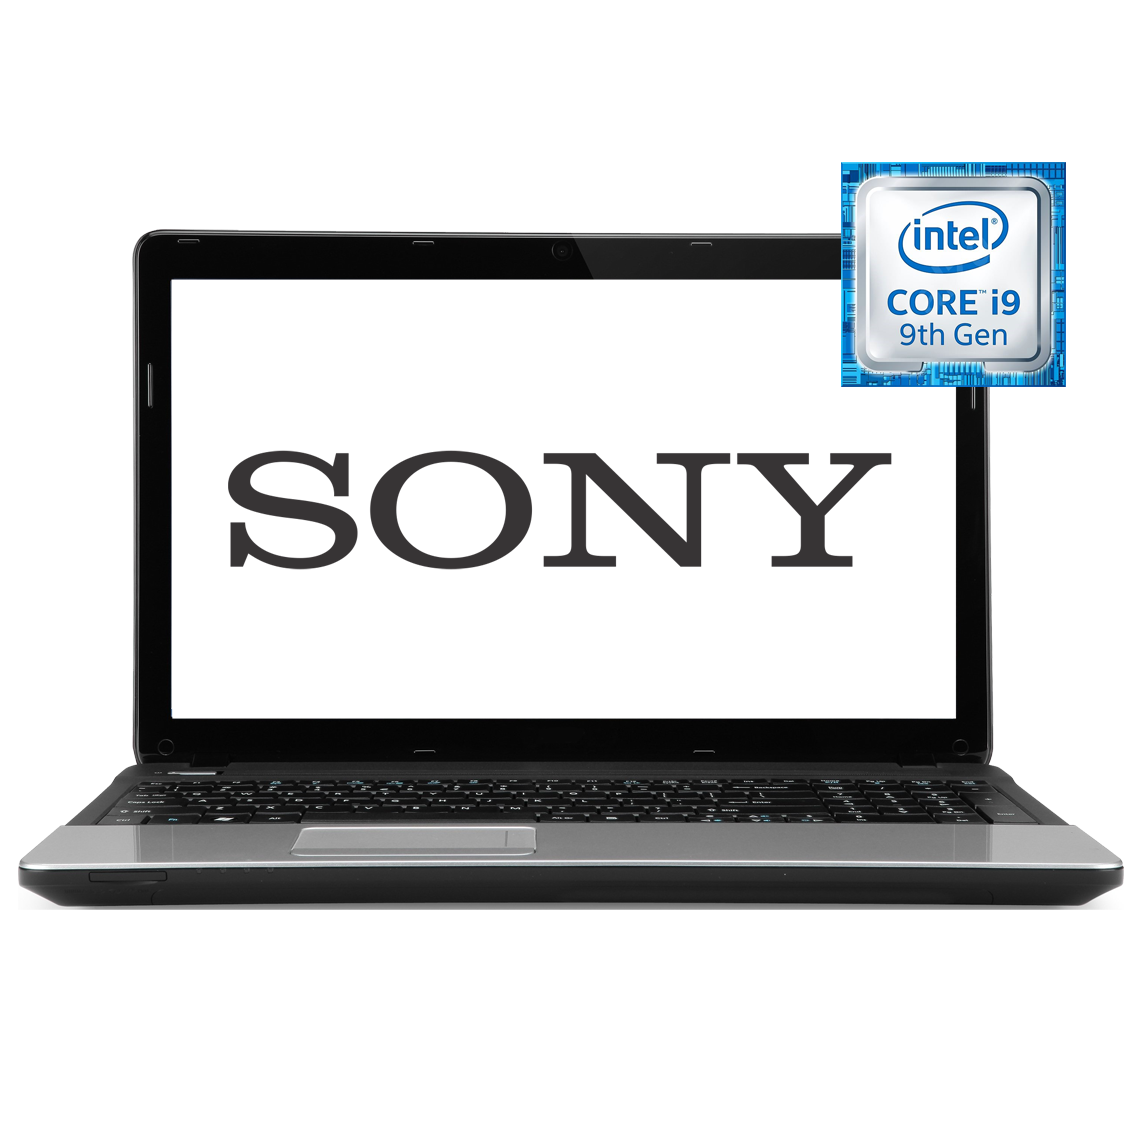 sony laptop logo png